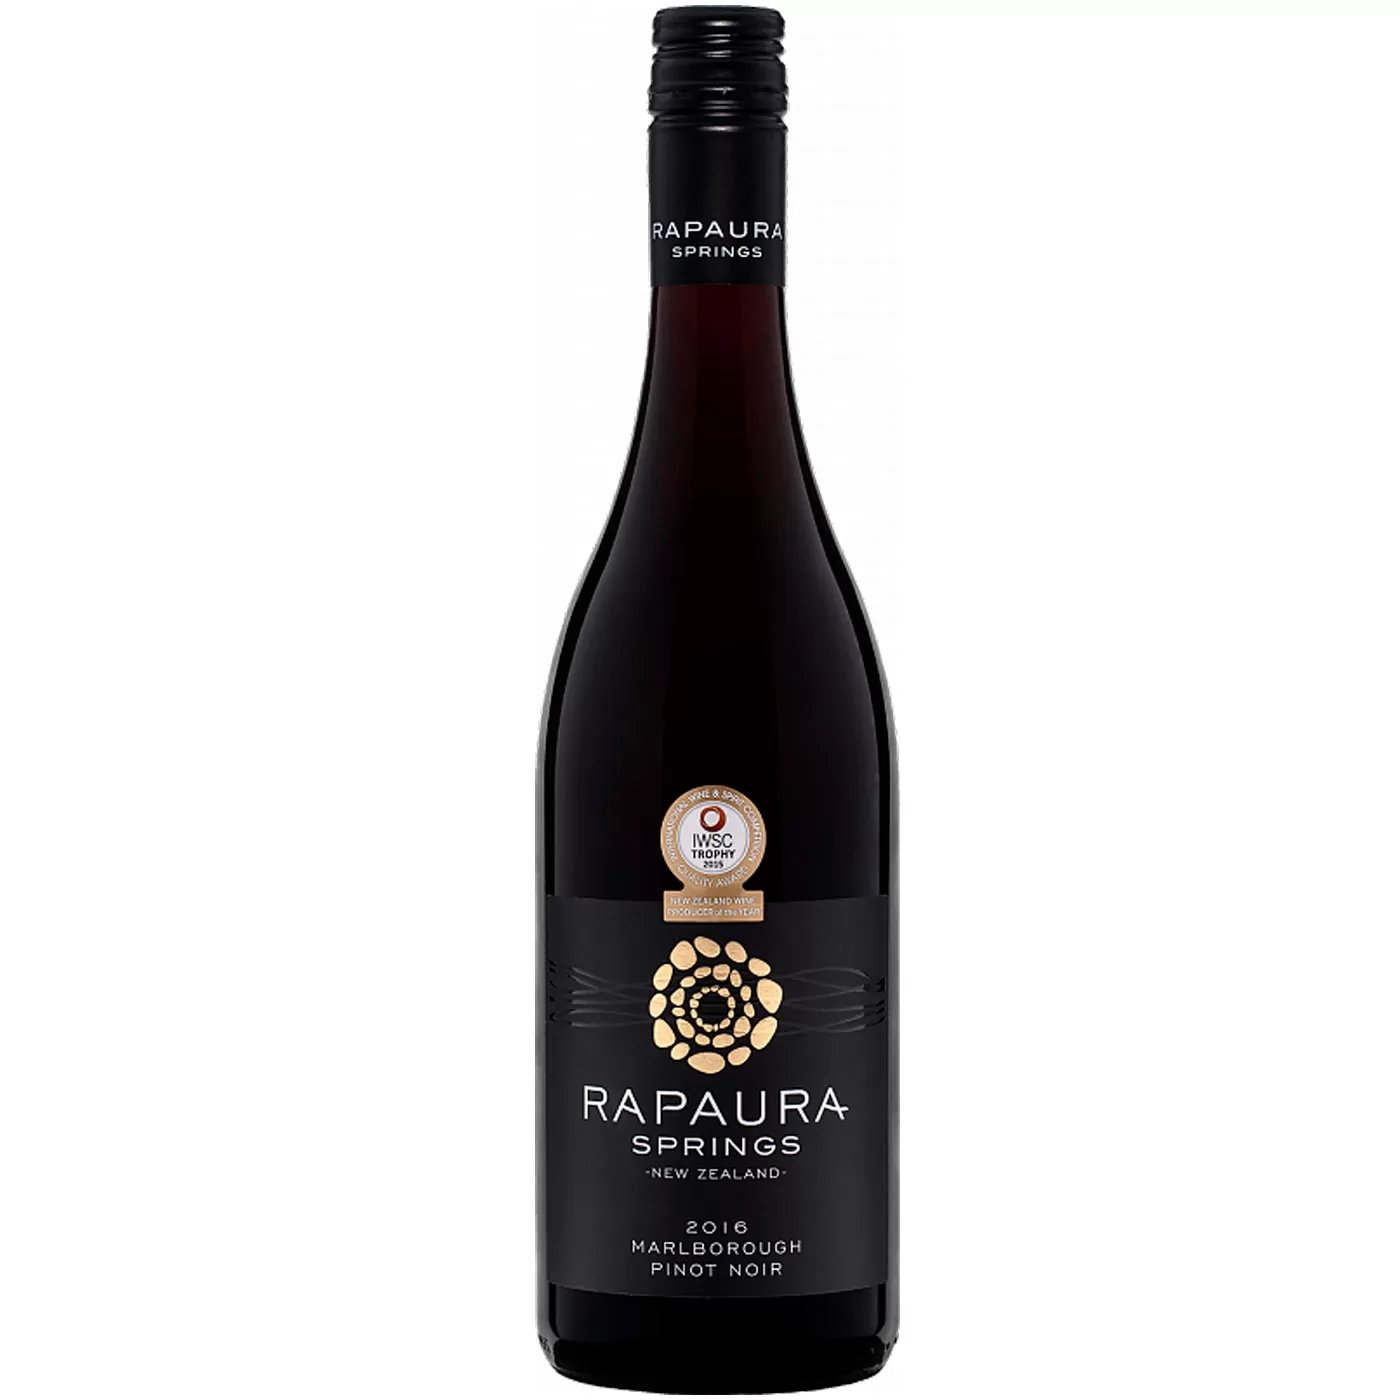 770 miles zinfandel. Вино Rapaura Springs Sauvignon Blanc. Rapaura Springs Pinot Noir Marlborough. Пино Нуар вино новая Зеландия. Rapaura Springs Sauvignon Blanc 2021.